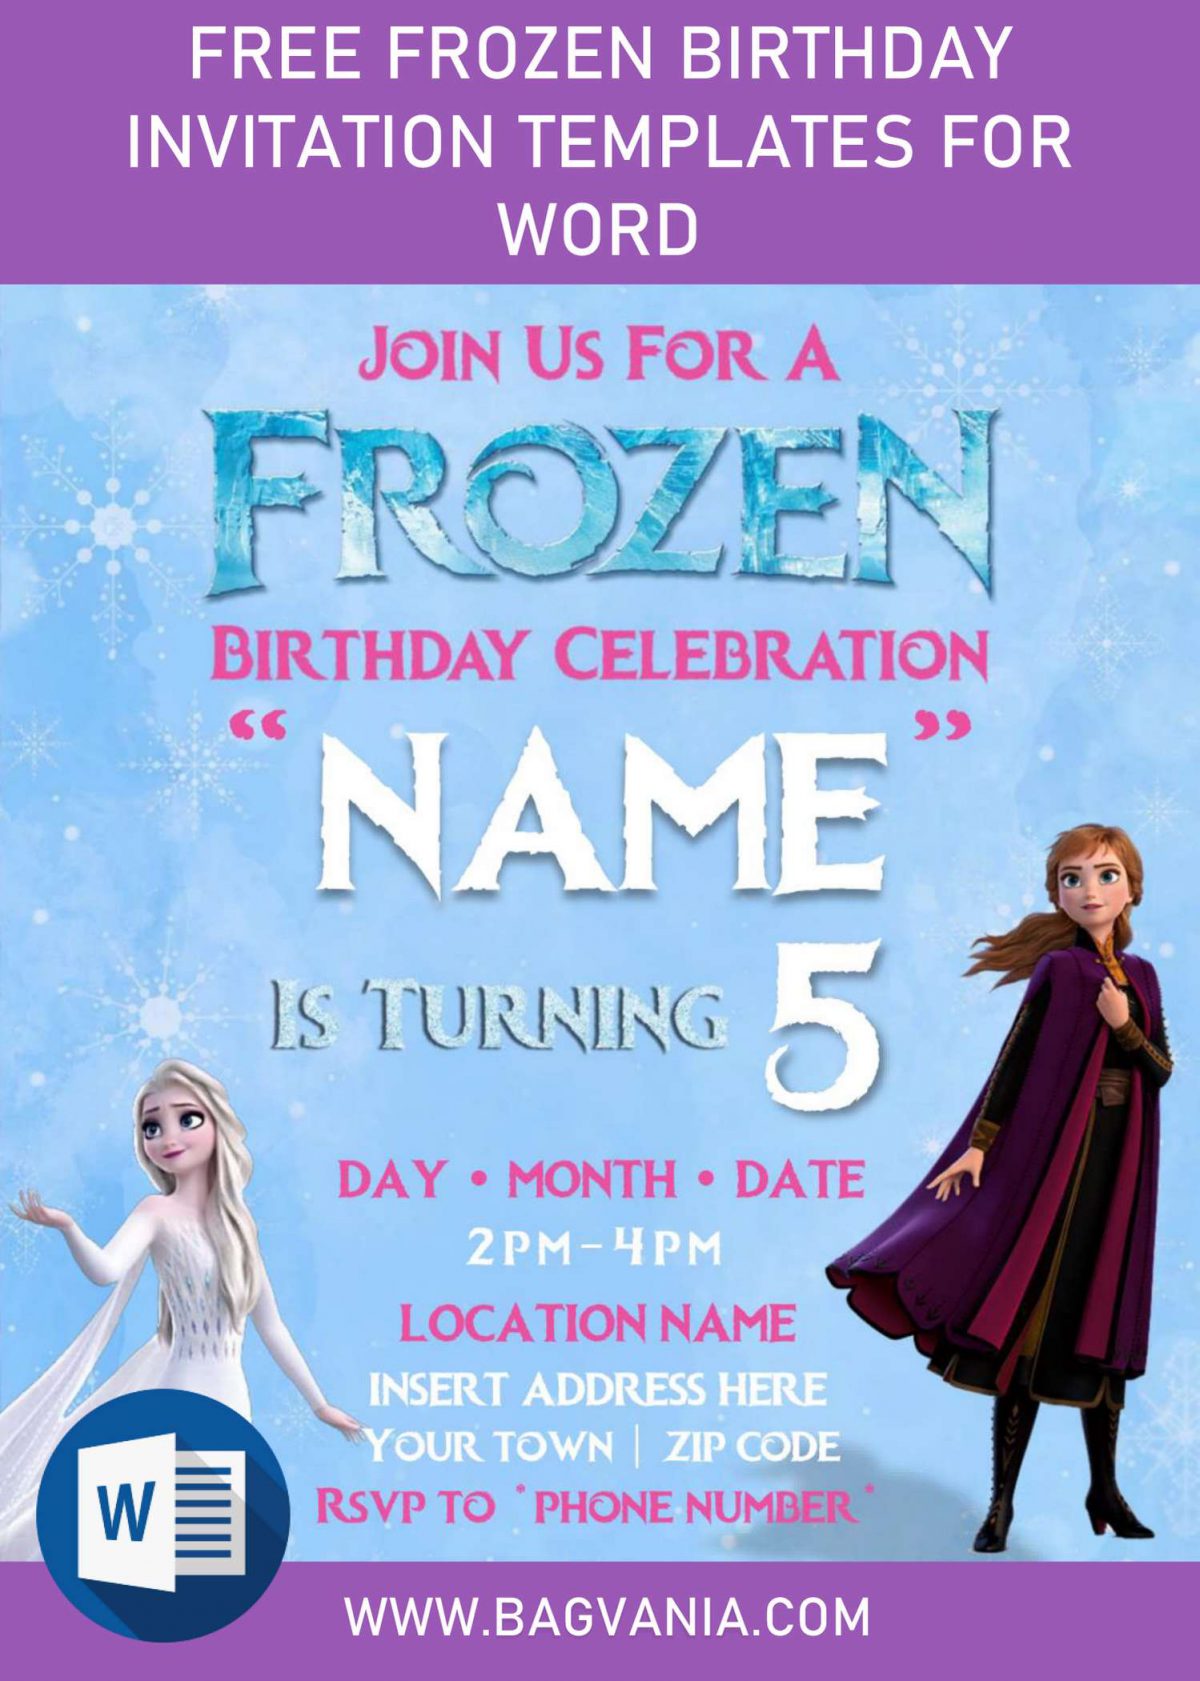 Free Frozen Birthday Invitation Templates For Word